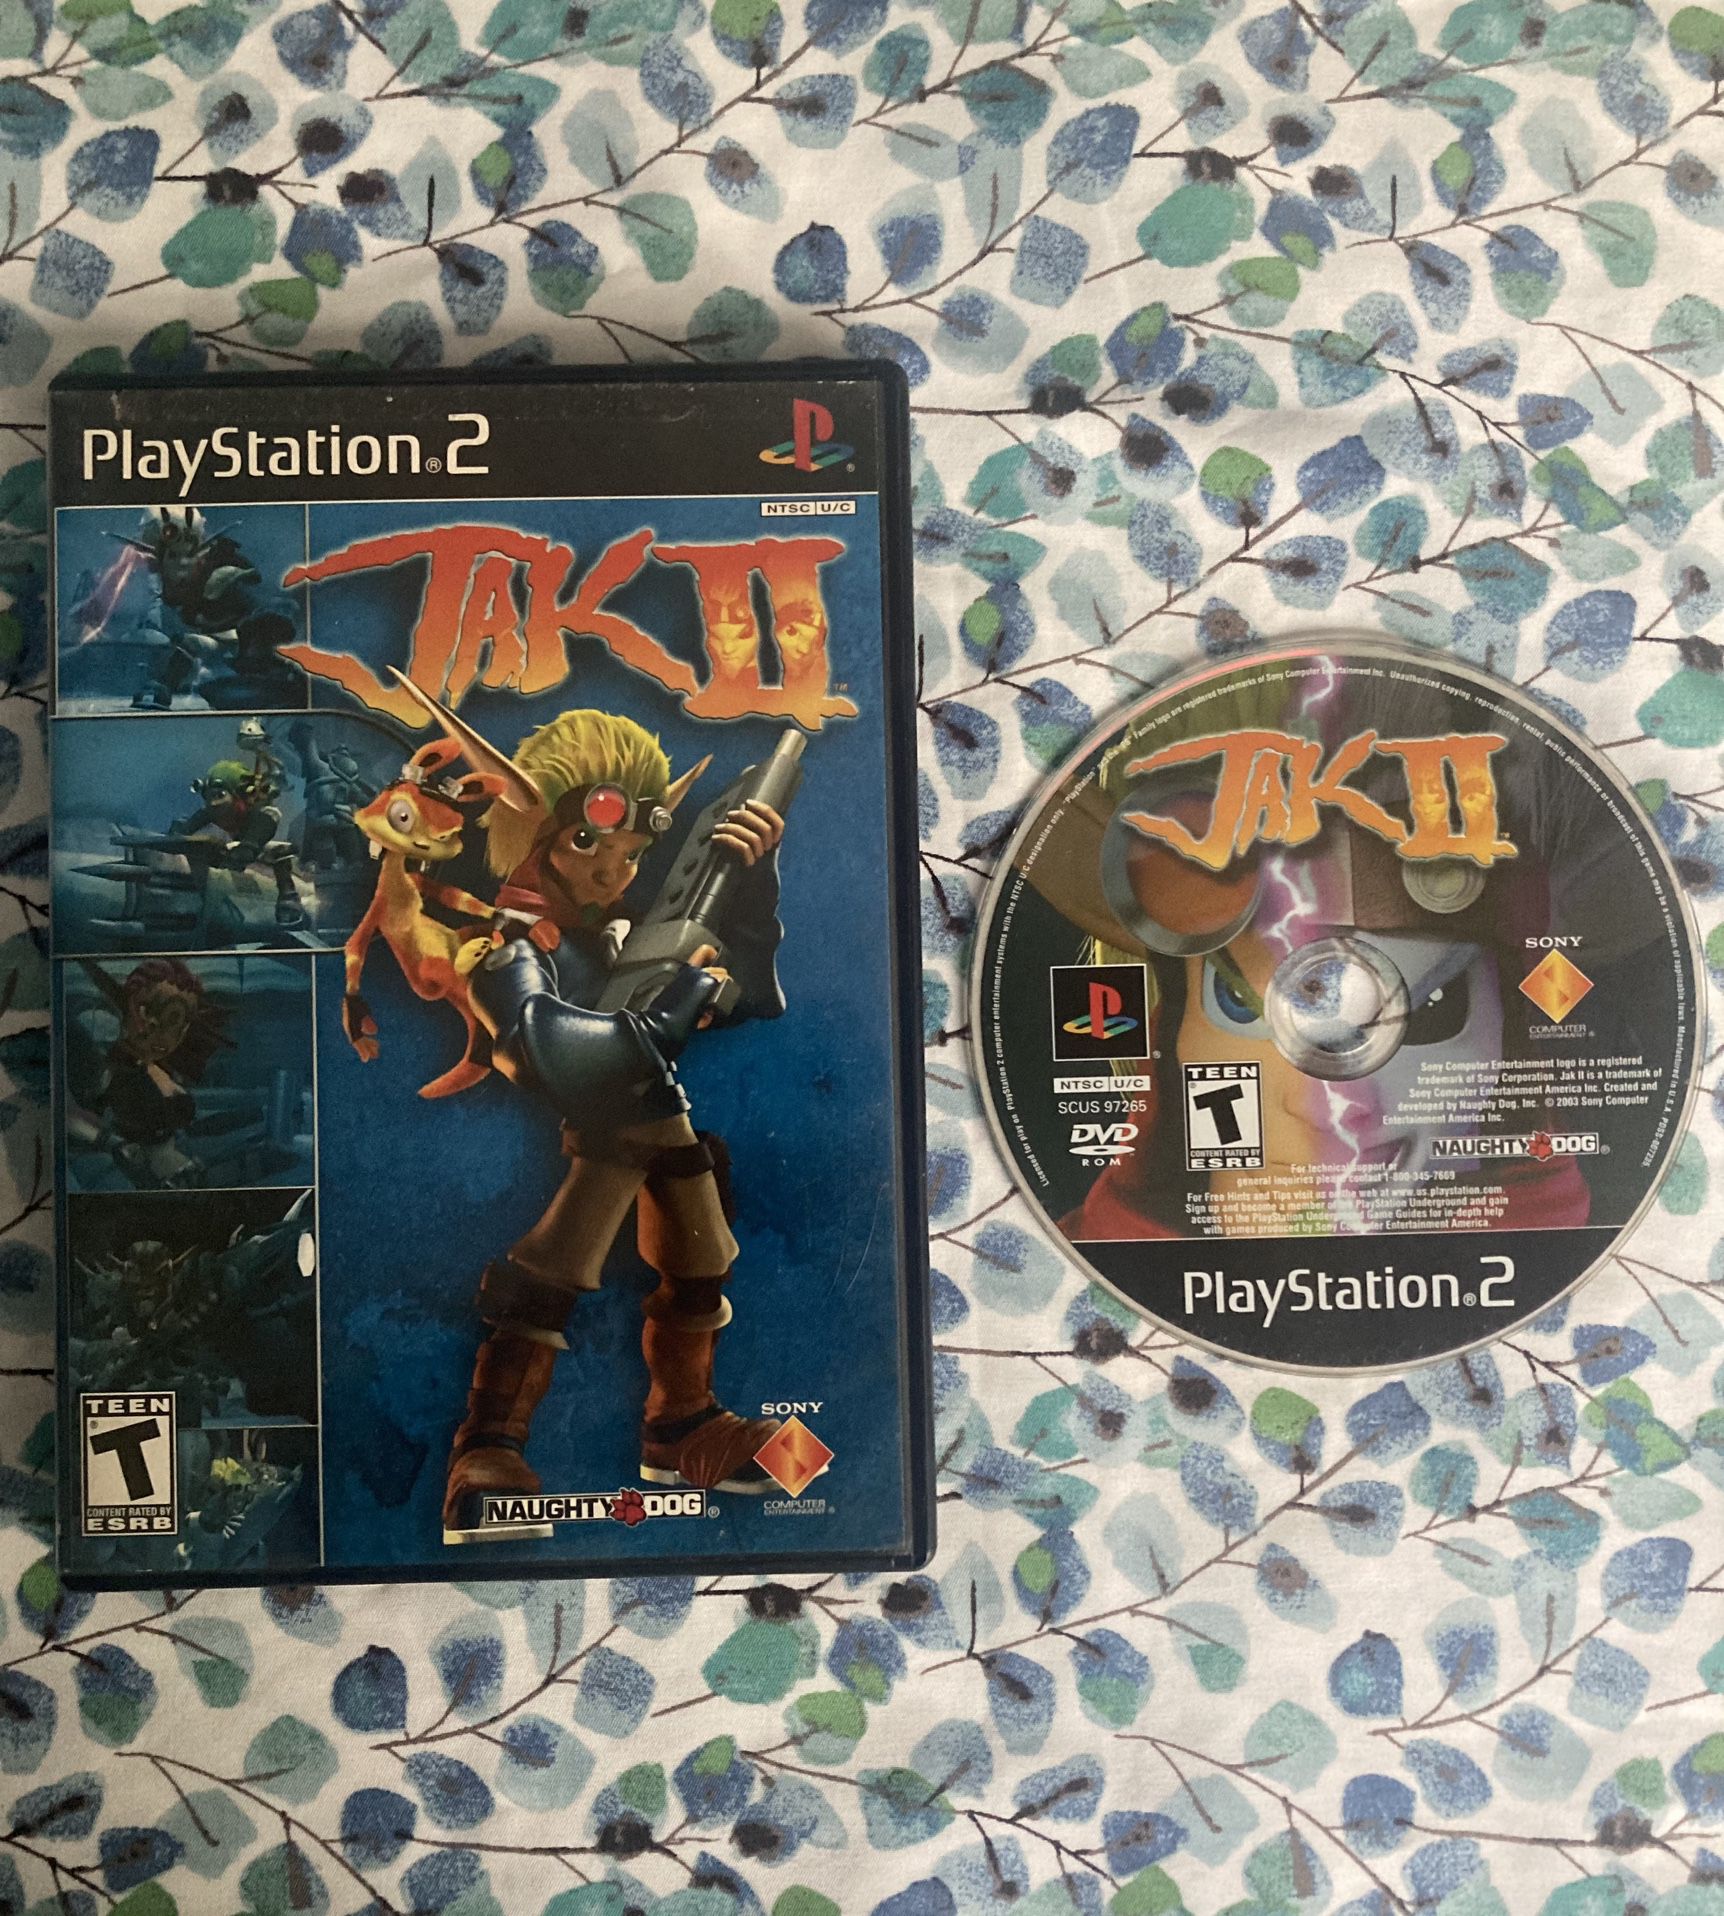 Jak II Playstation 2 (NO MANUAL)